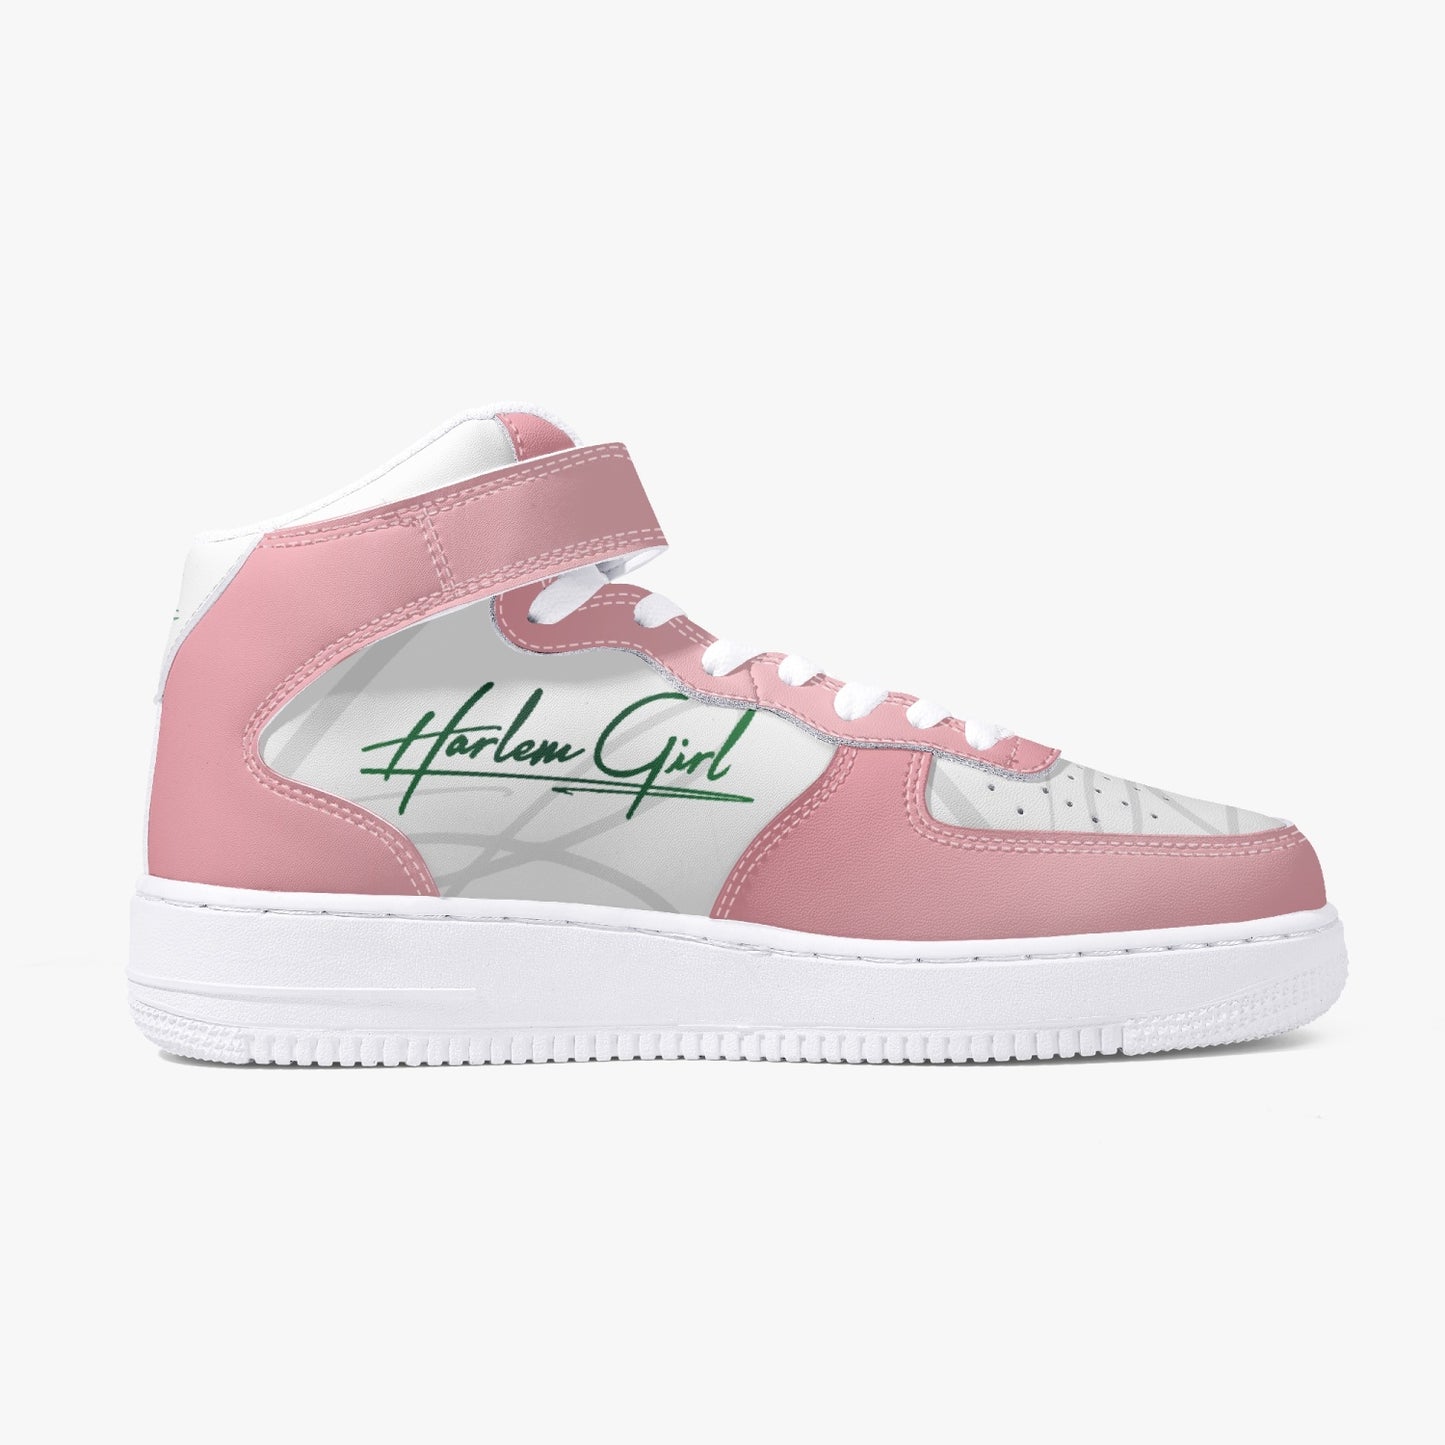 HB Harlem Girl "Strapped" Women's Leather Hi Top Kicks - Pink n Green